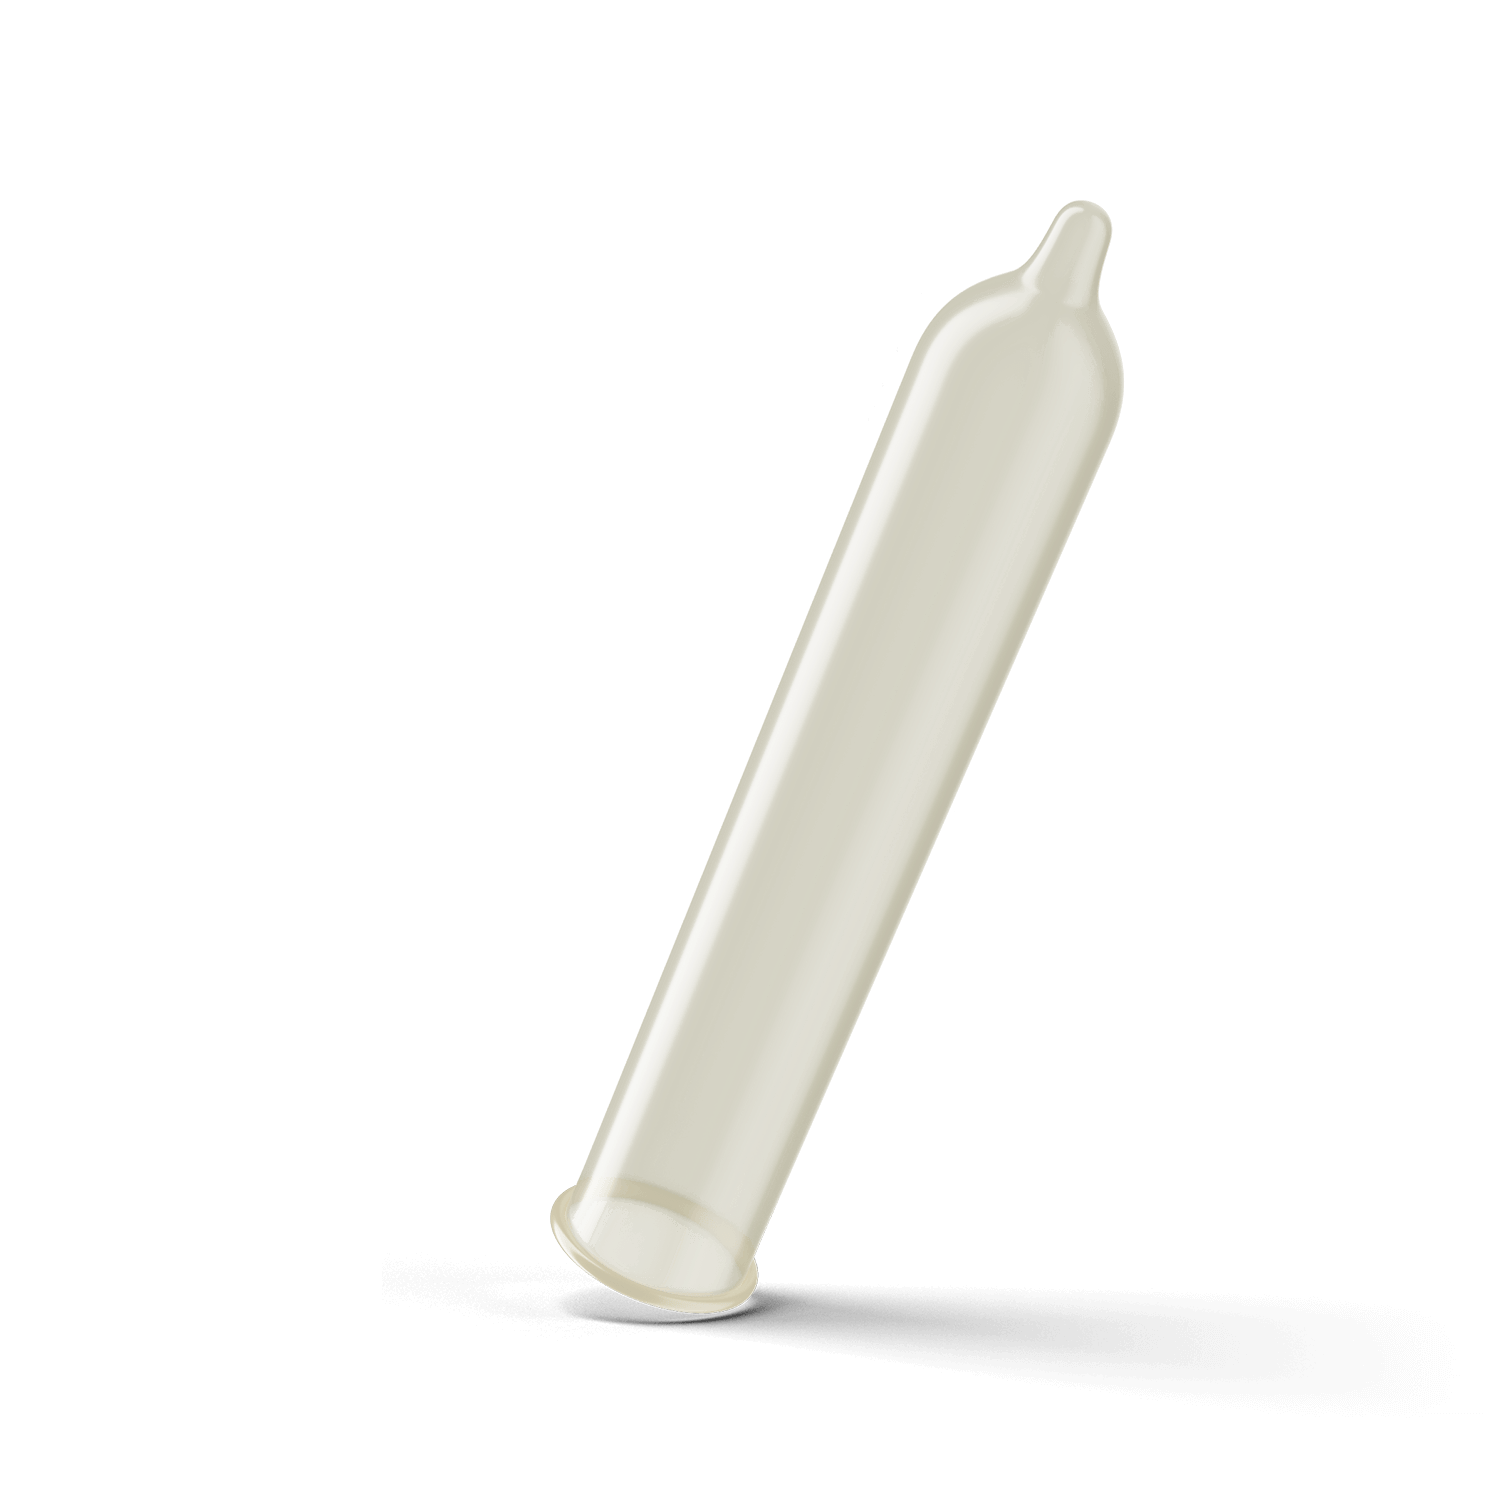 Trojan Extended Pleasure straight condom shape with reservoir tip.